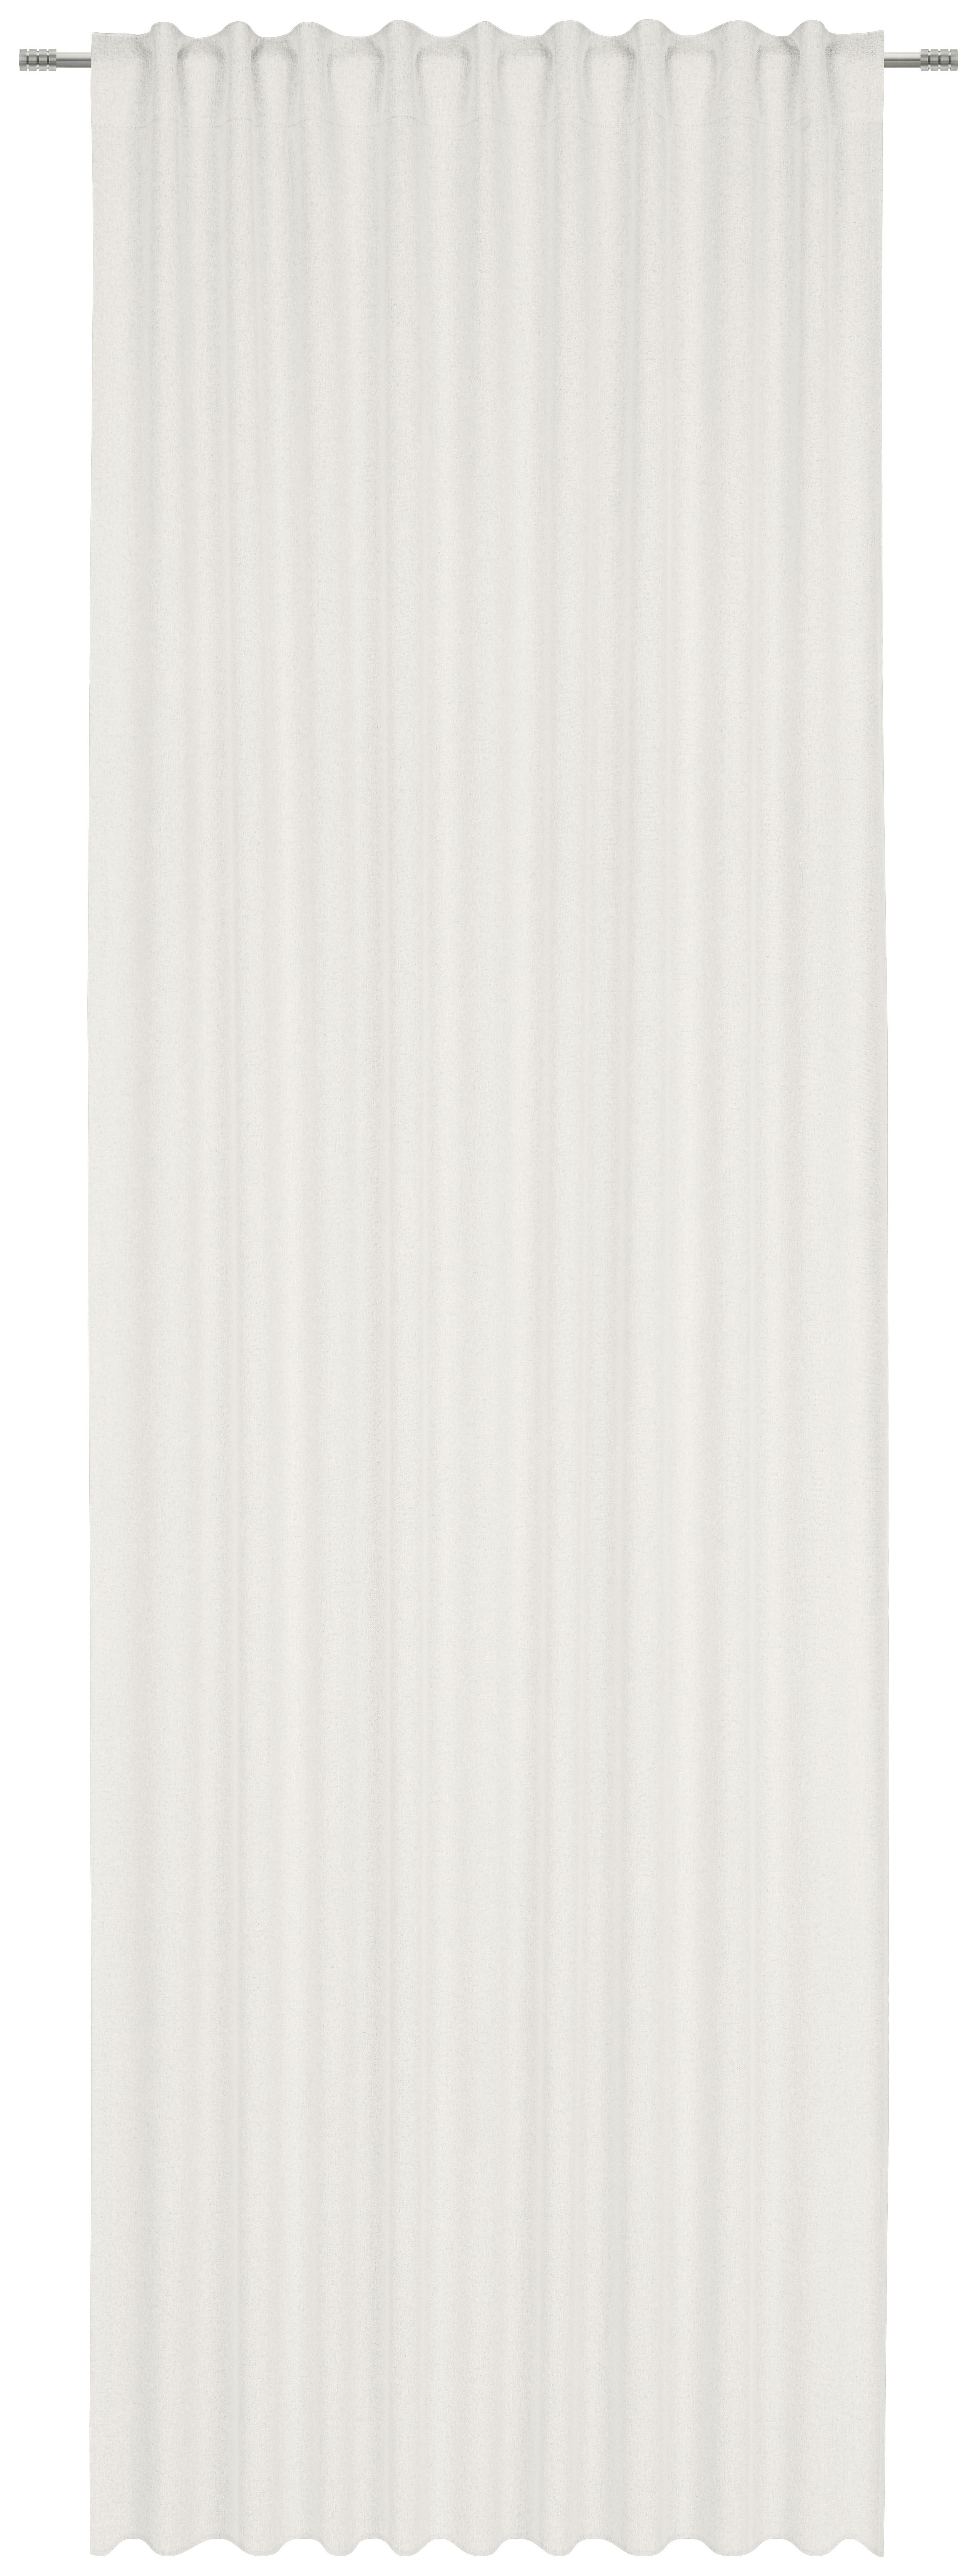 ESPOSA Fadenvorhang Silberfarben/Weiß transparent